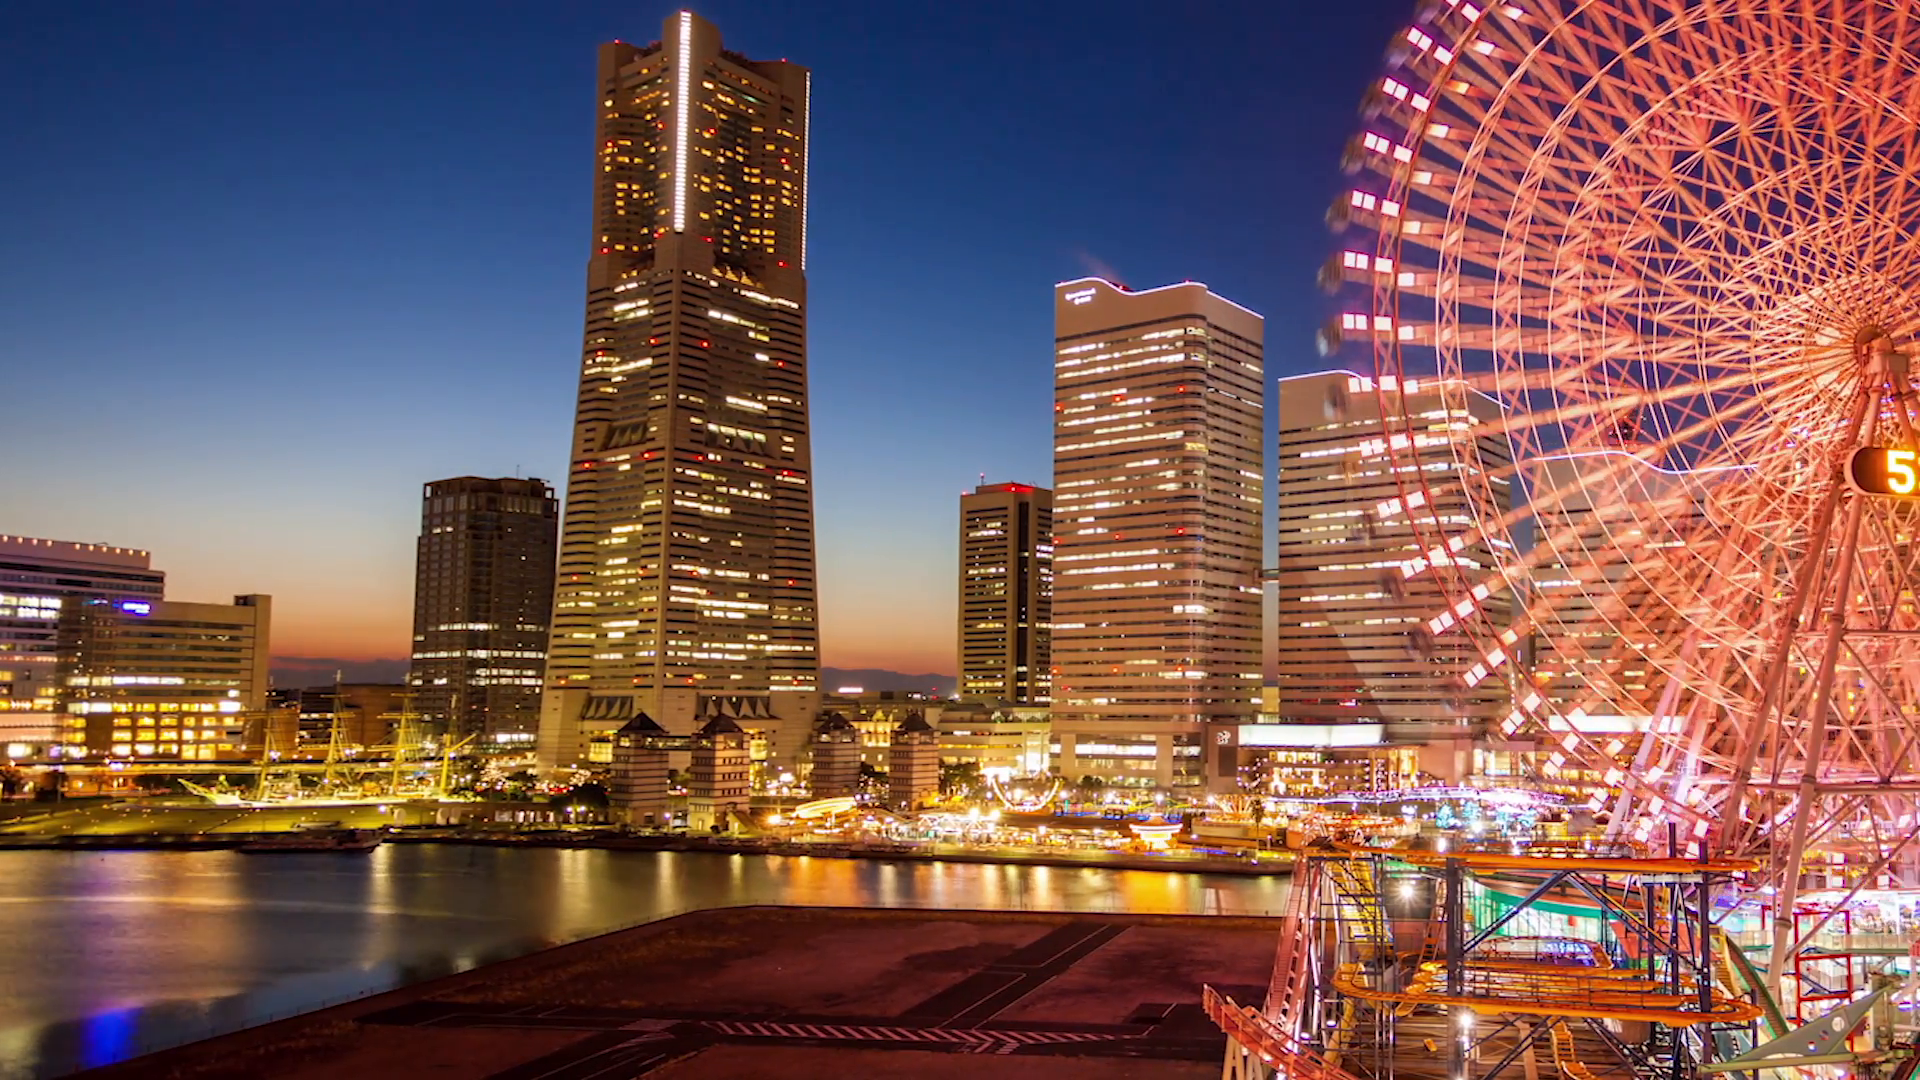 Dolly left timelapse Nighttime view of Yokohama Buildings and Ferris ...